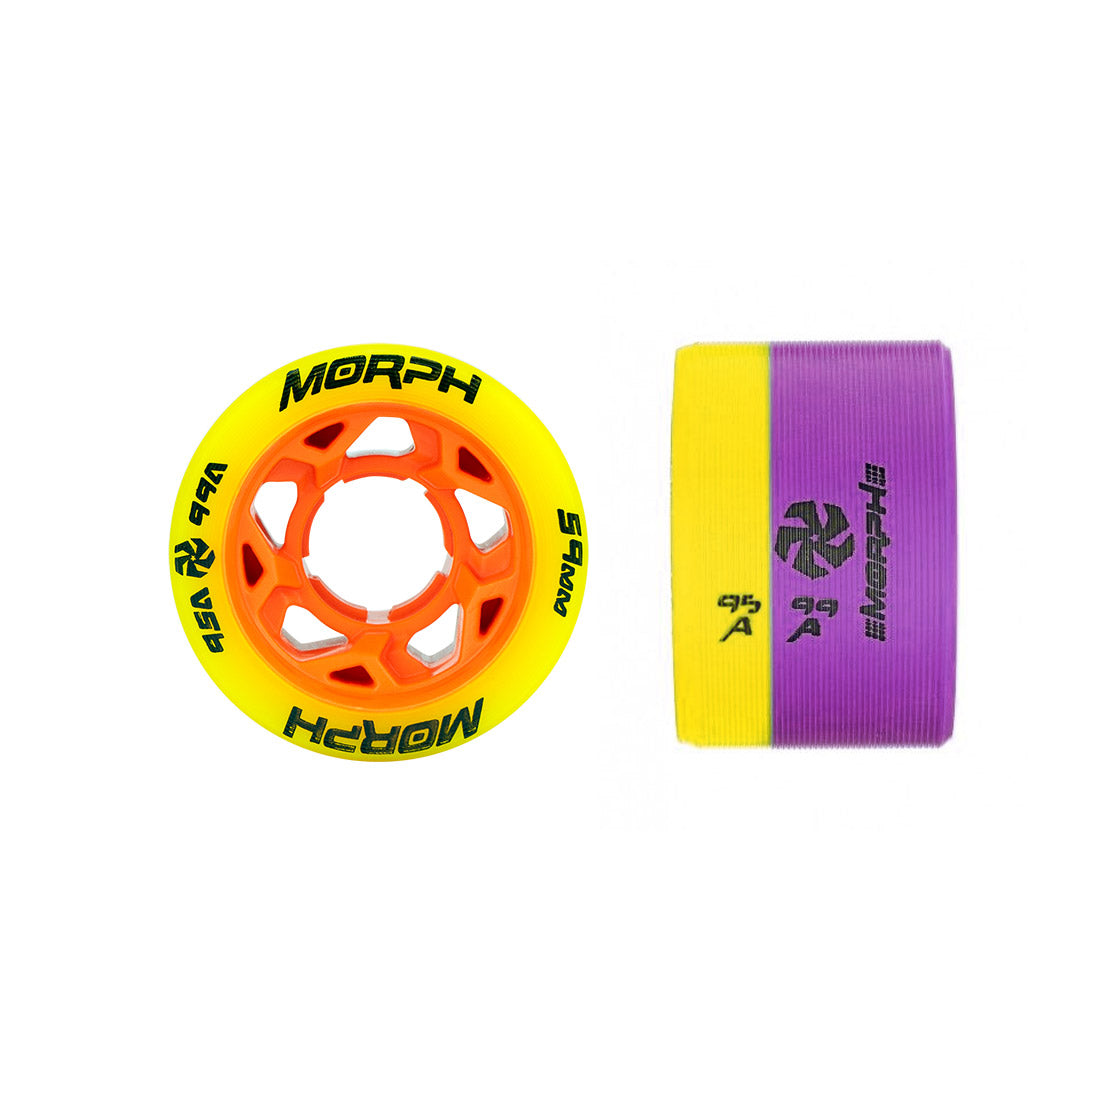 Reckless Morph Dual 59mm Wheels 4pk 95a/99a | Yellow/Purple Roller Skate Wheels